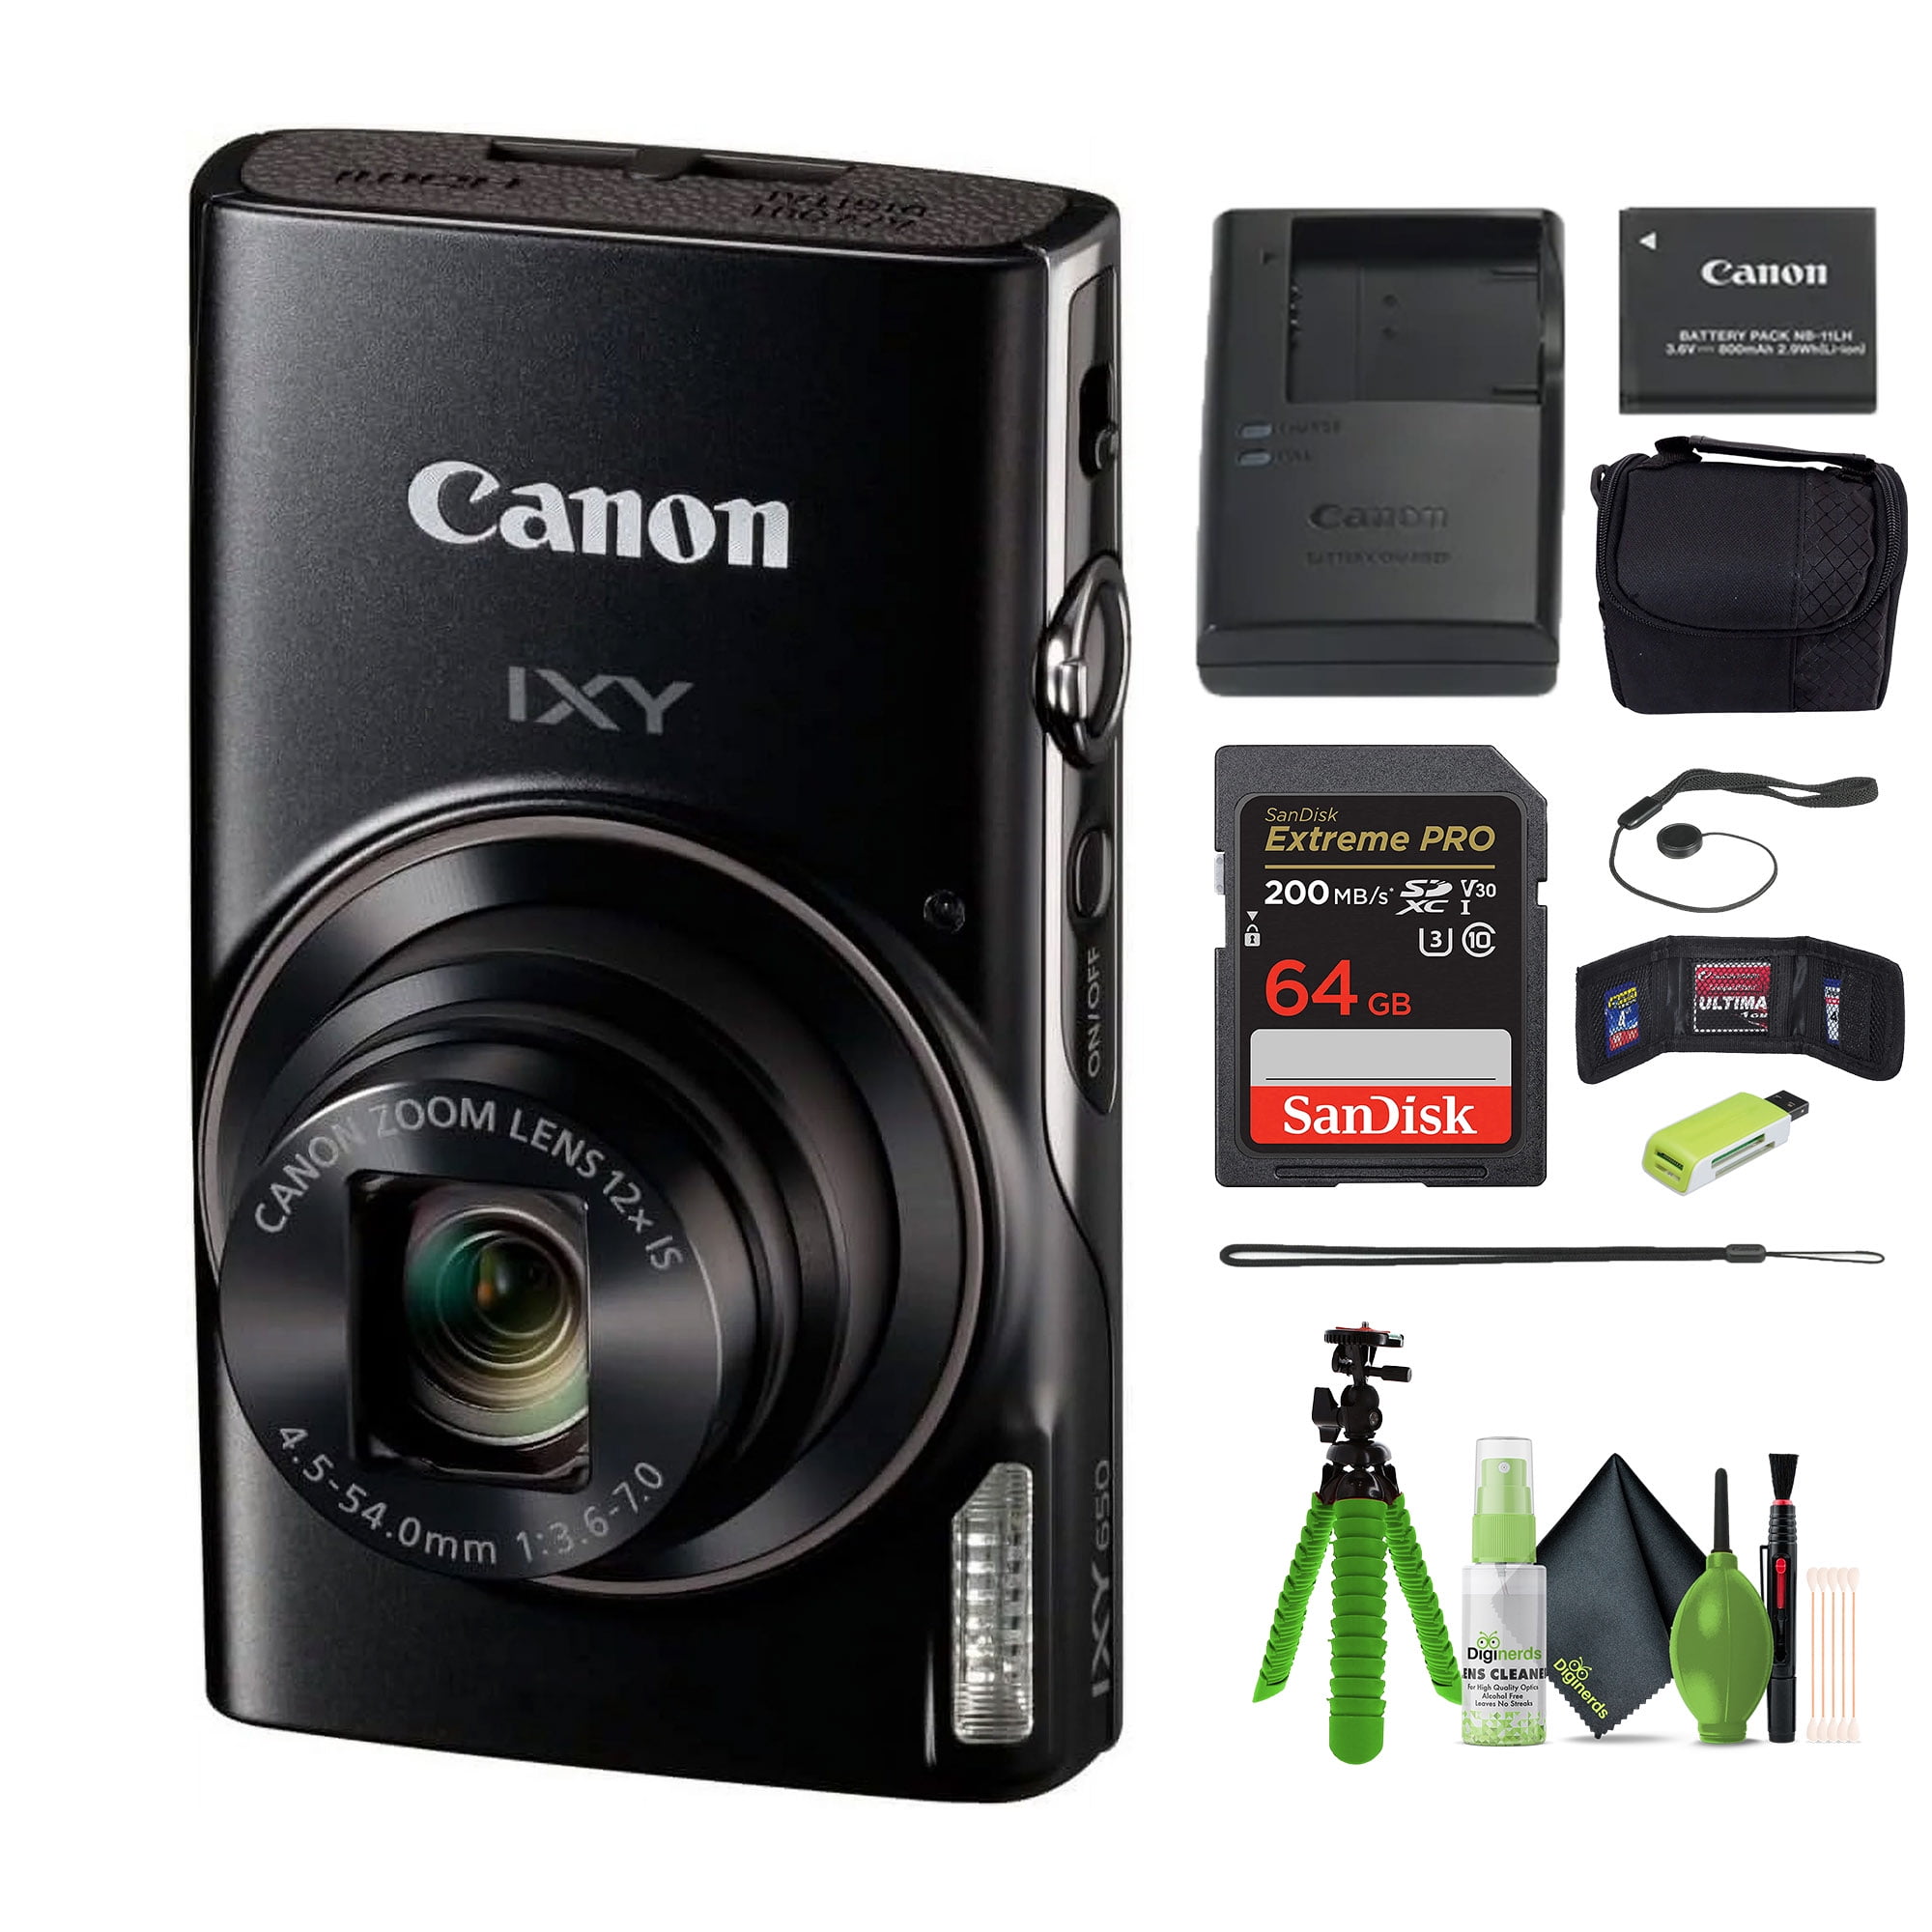 Canon compact digital camera IXY 650 12x optical zoom IXY650 (BK) (Black)